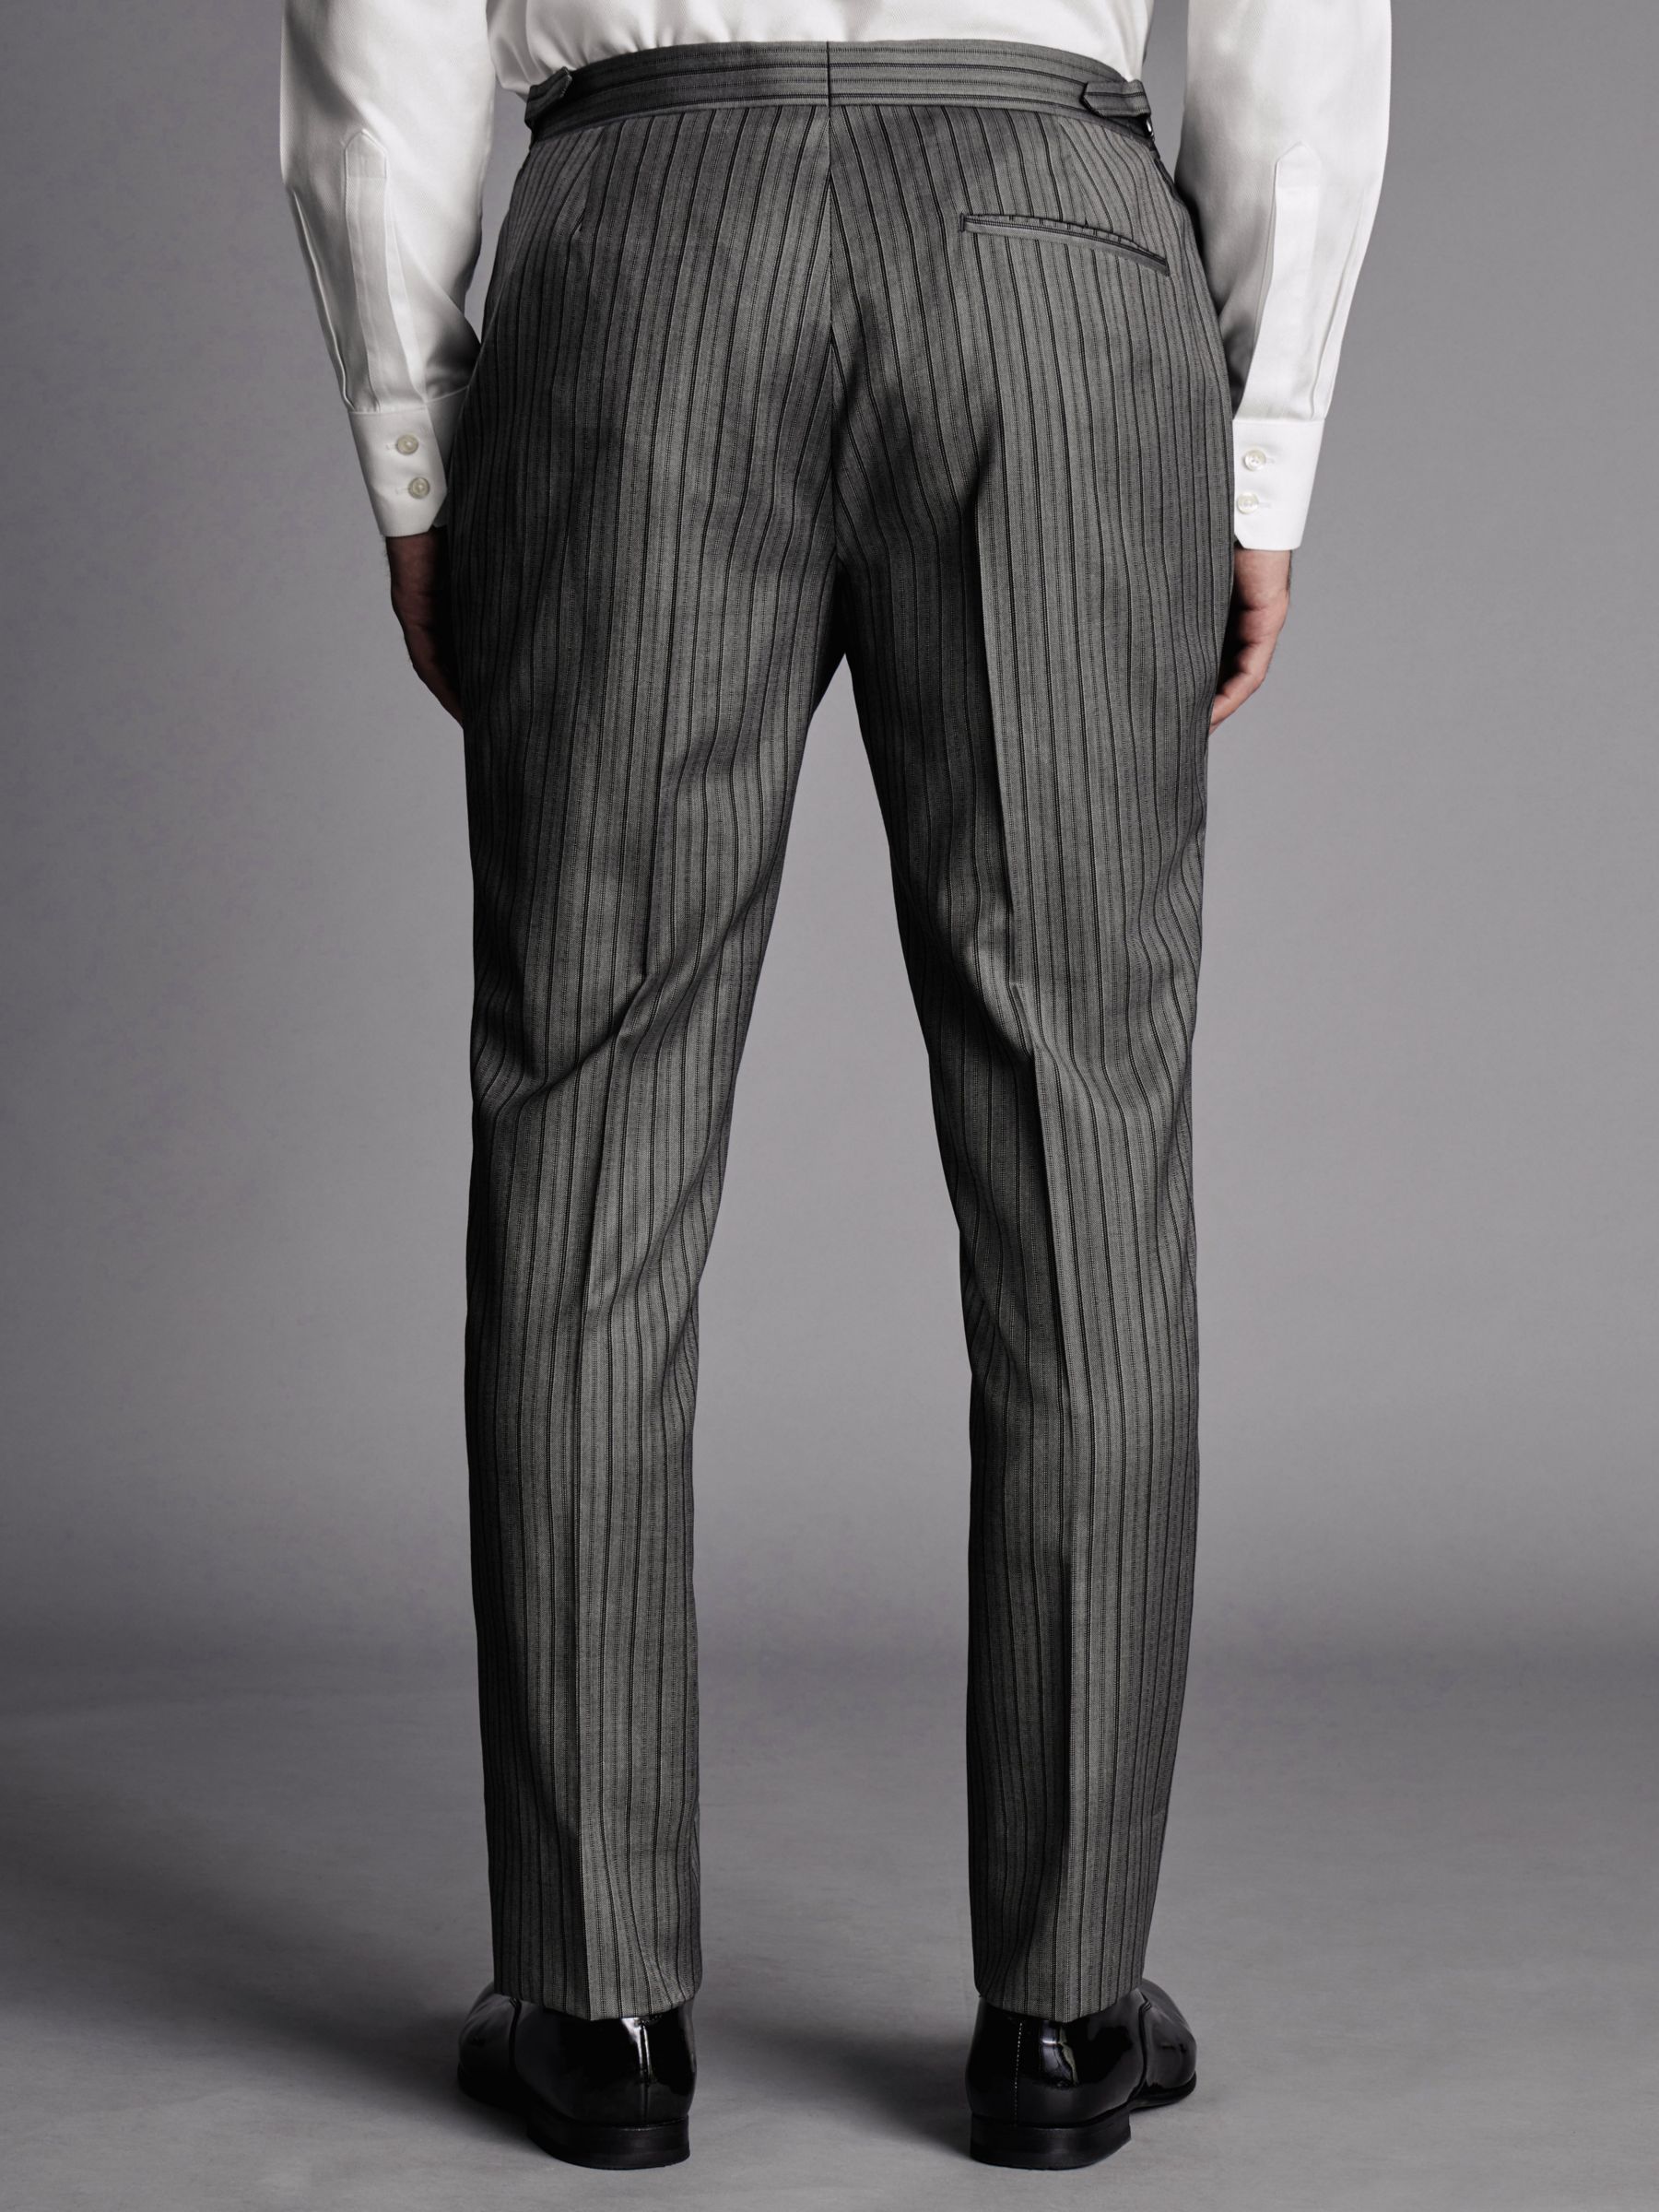 Charles Tyrwhitt Morning Stripe Slim Fit Suit Trousers, Grey, W36/L32